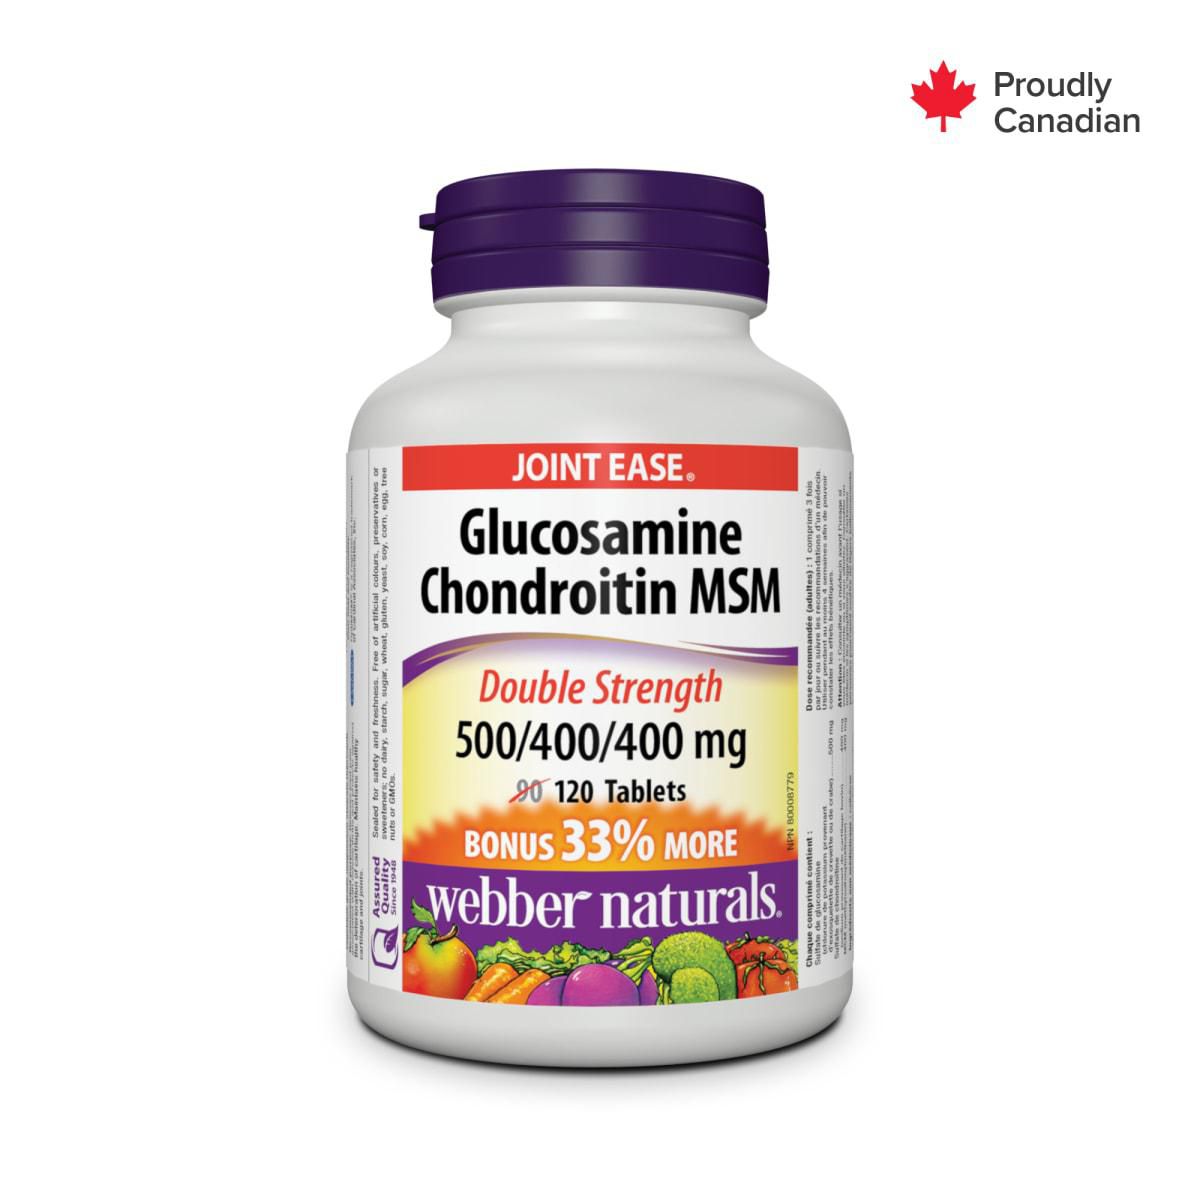 Webber Naturals® Glucosamine Chondroitin MSM Double Strength,  500/400/400 mg